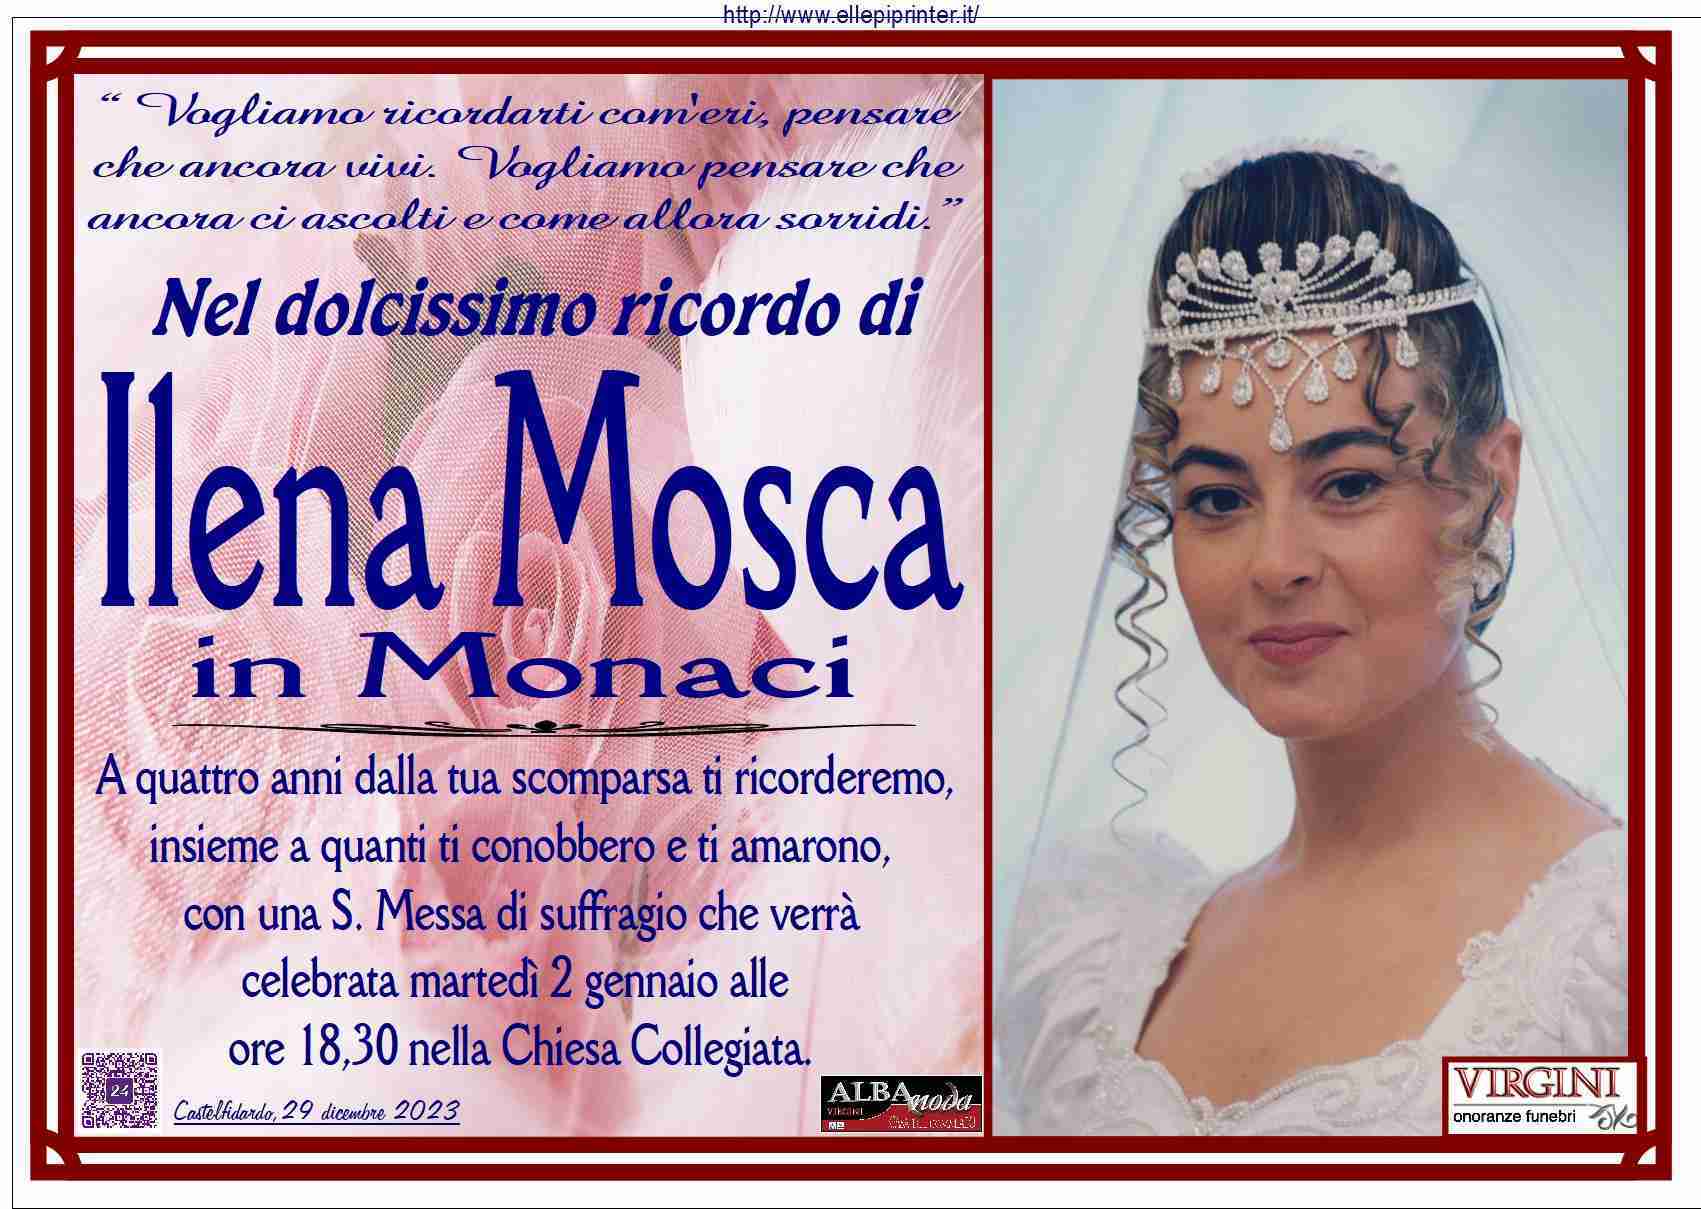 Ilena Mosca